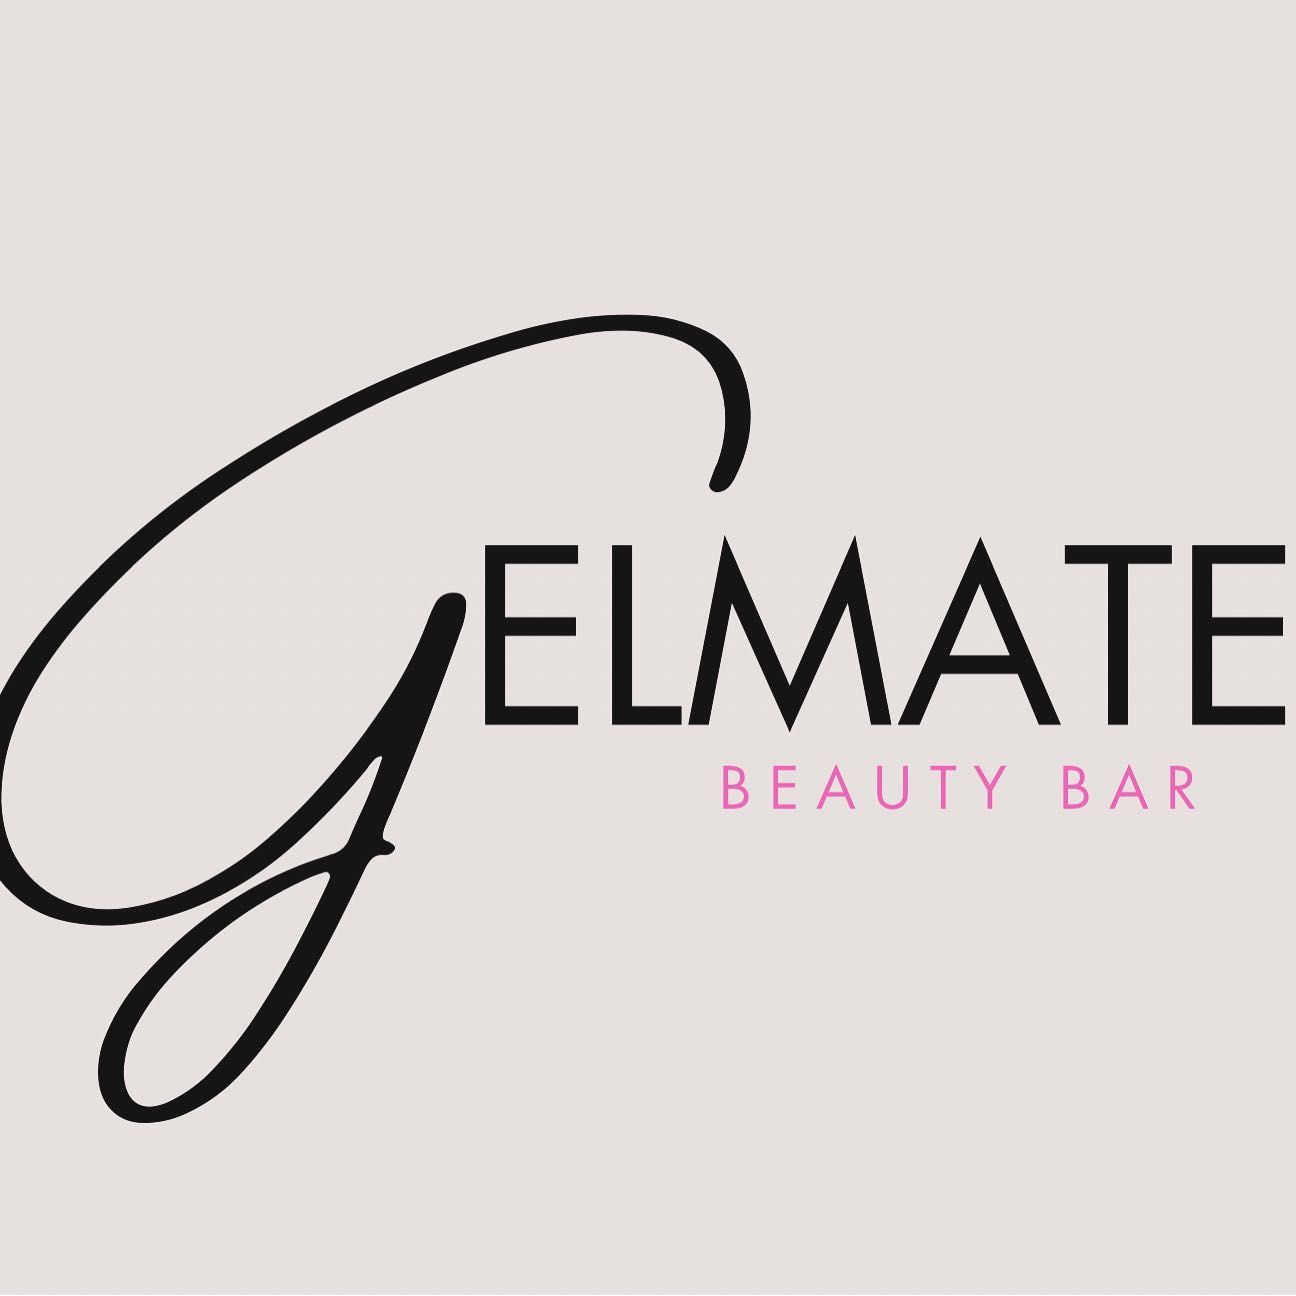 Gelmate Beauty Bar, 5731 Hollywood Blvd, Hollywood, 33021